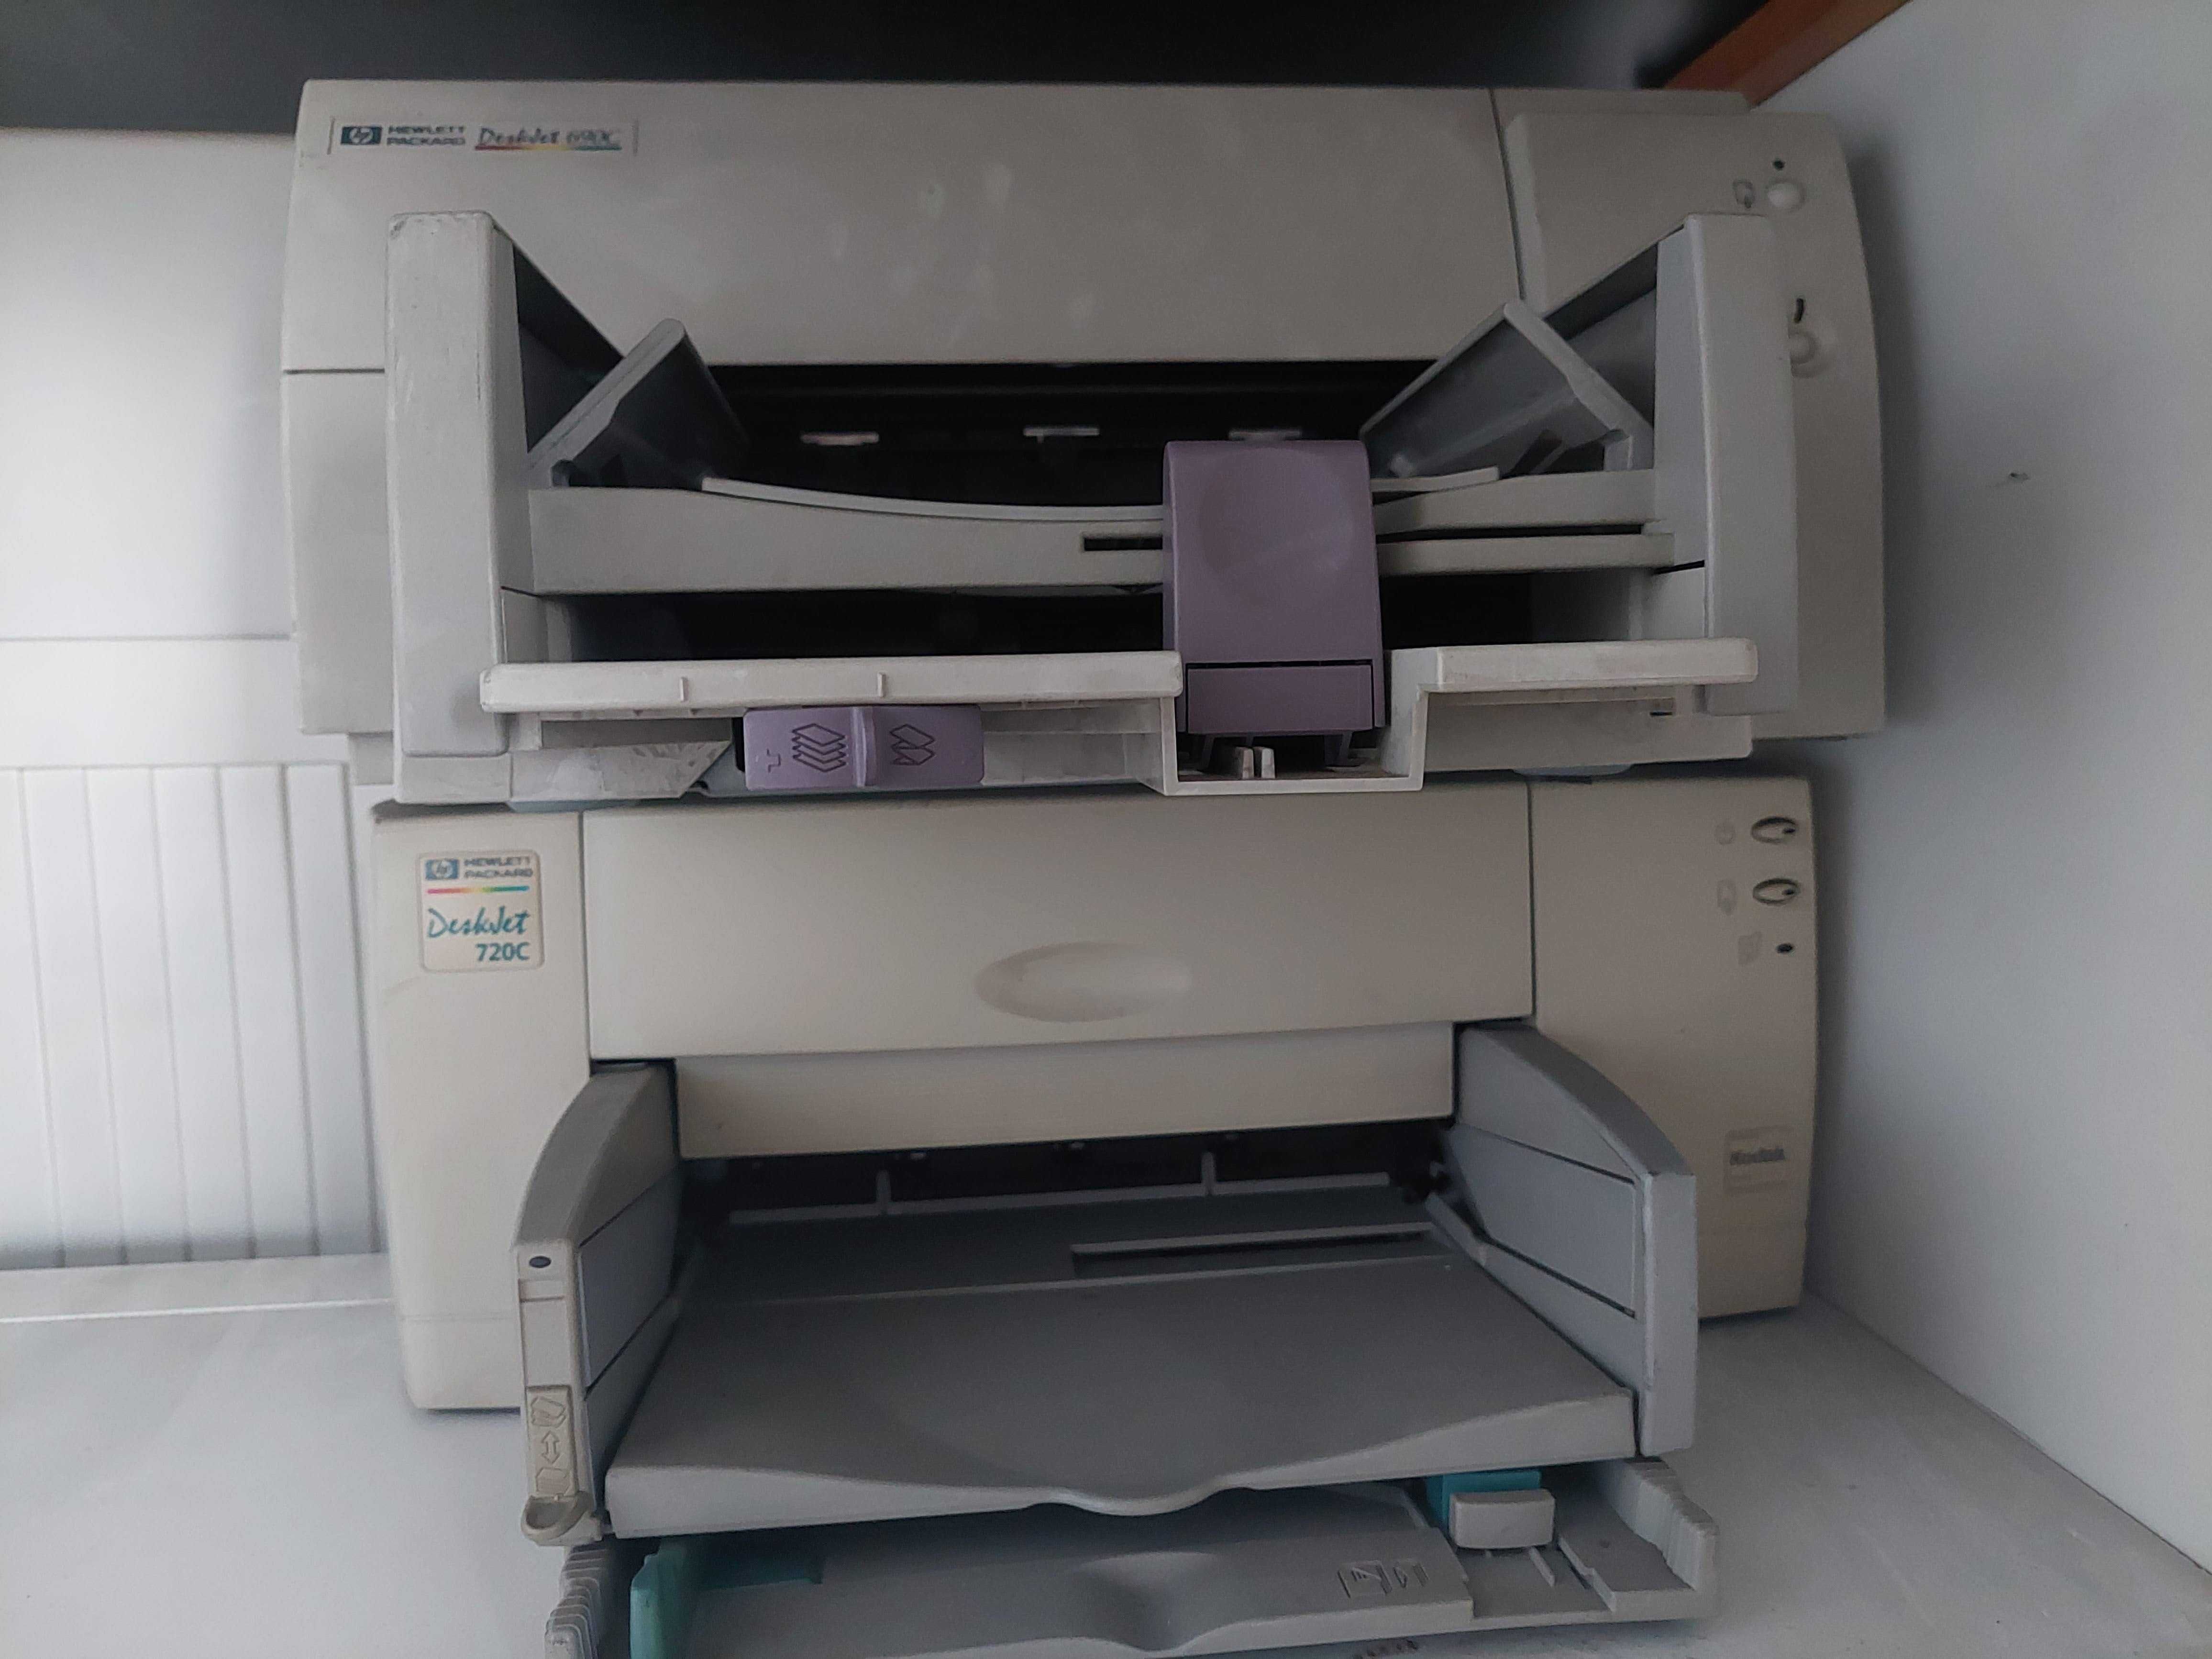 Impressoras HP Deskjet 690c e Deskjet 720c